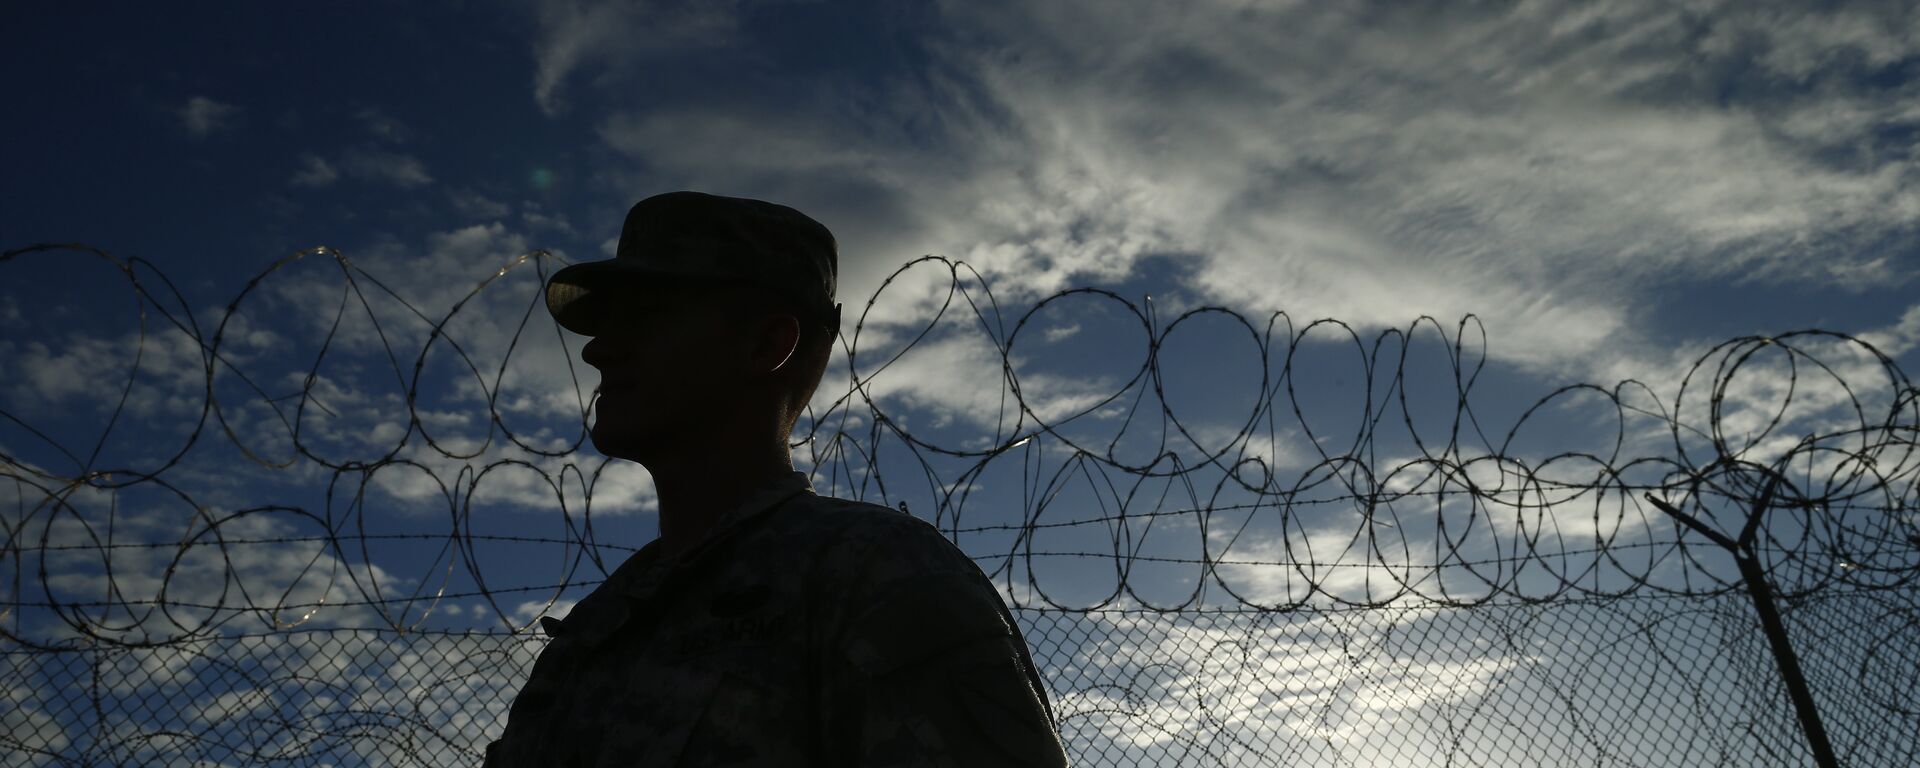 Soldado estadounidense en Guantánamo - Sputnik Mundo, 1920, 17.09.2019